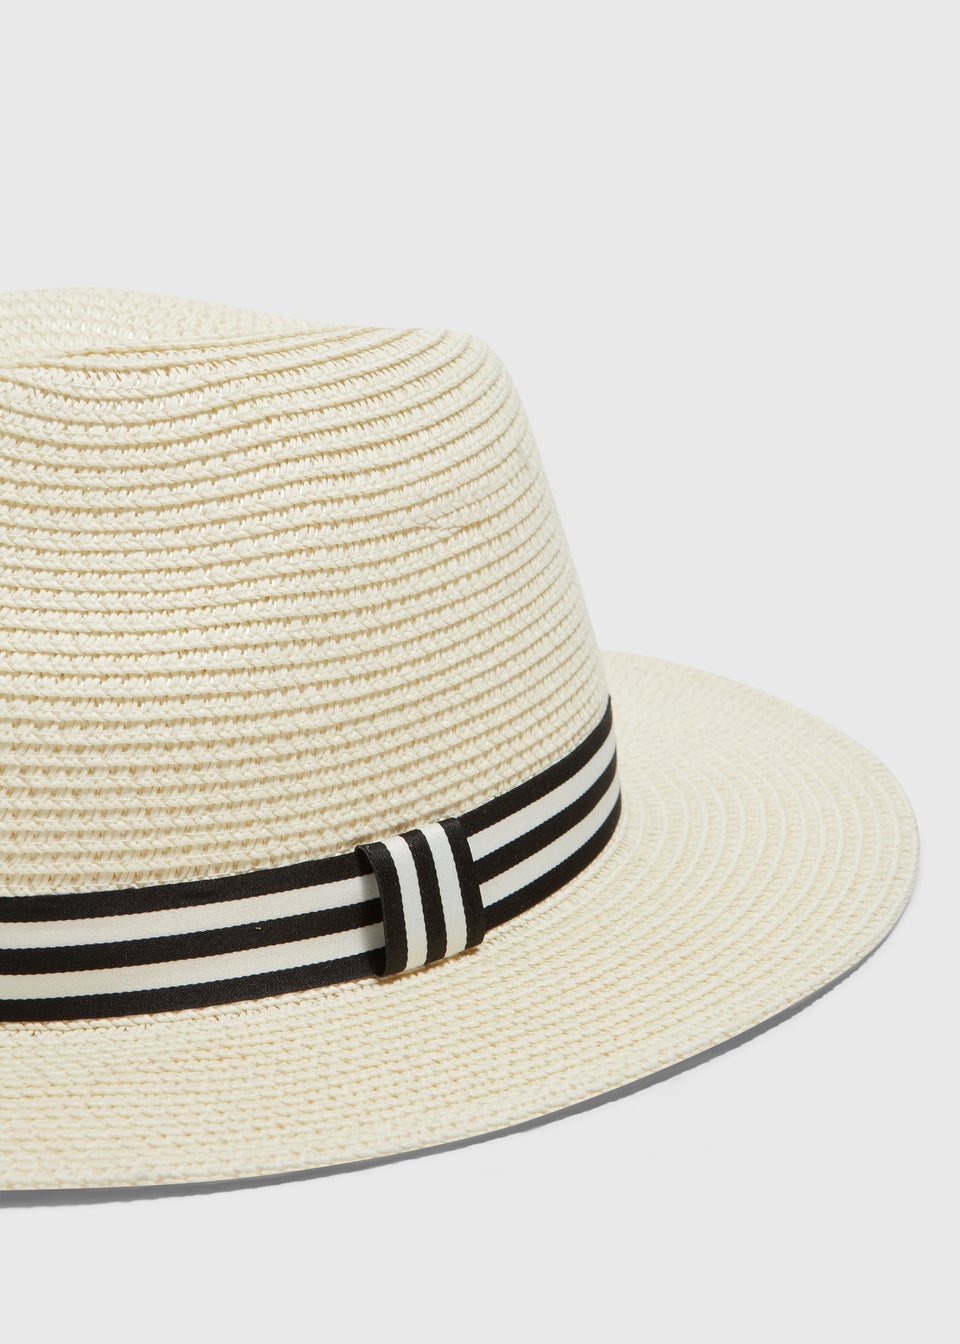 Bone Panama Hat